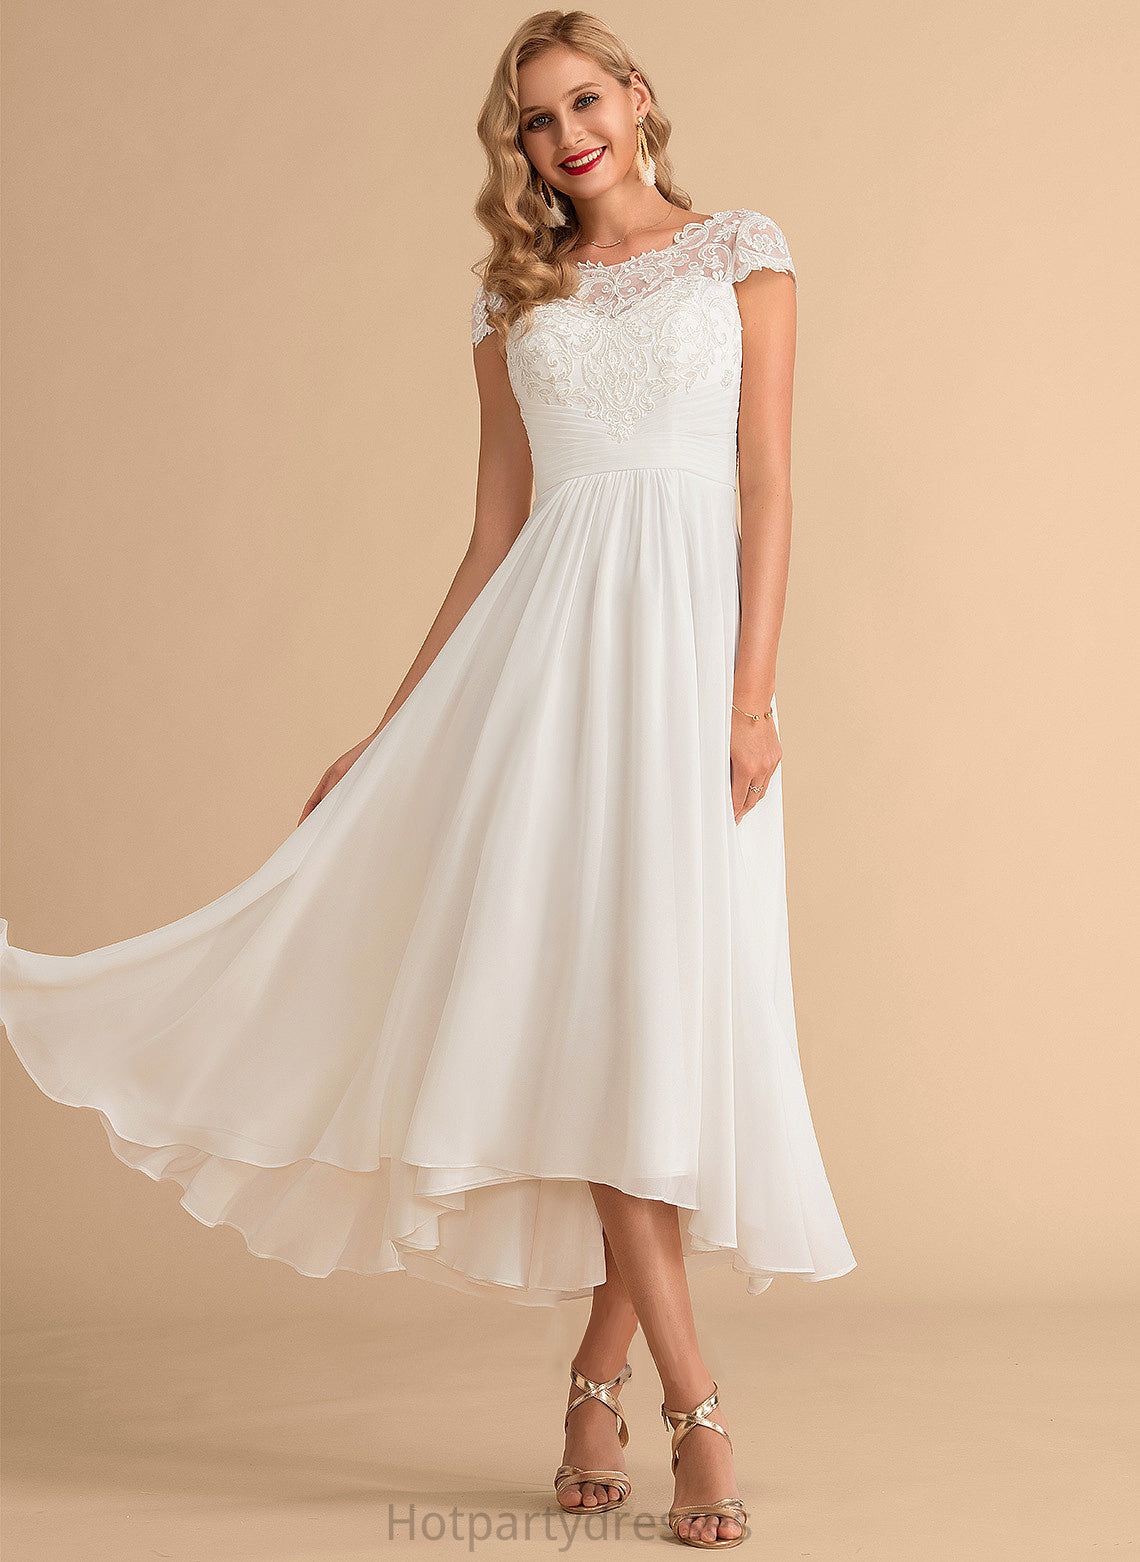 Asymmetrical Dress Scoop Chiffon Janae Wedding Neck A-Line Wedding Dresses